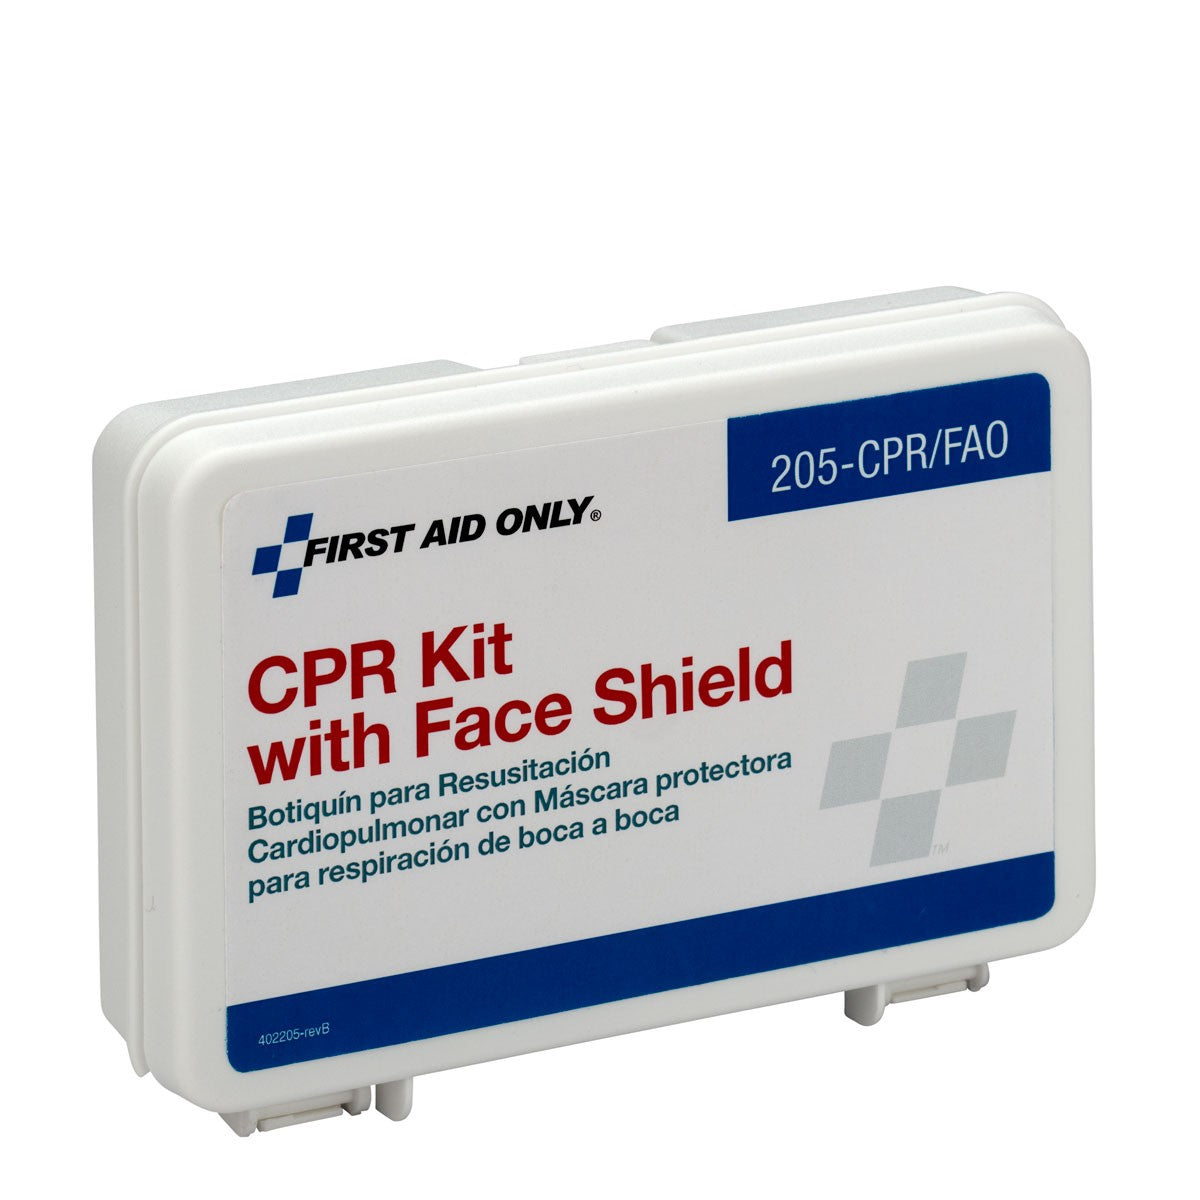 CPR Kit, Single Use, Plastic Case - BS-FAK-205-CPR/FAO-1-FM